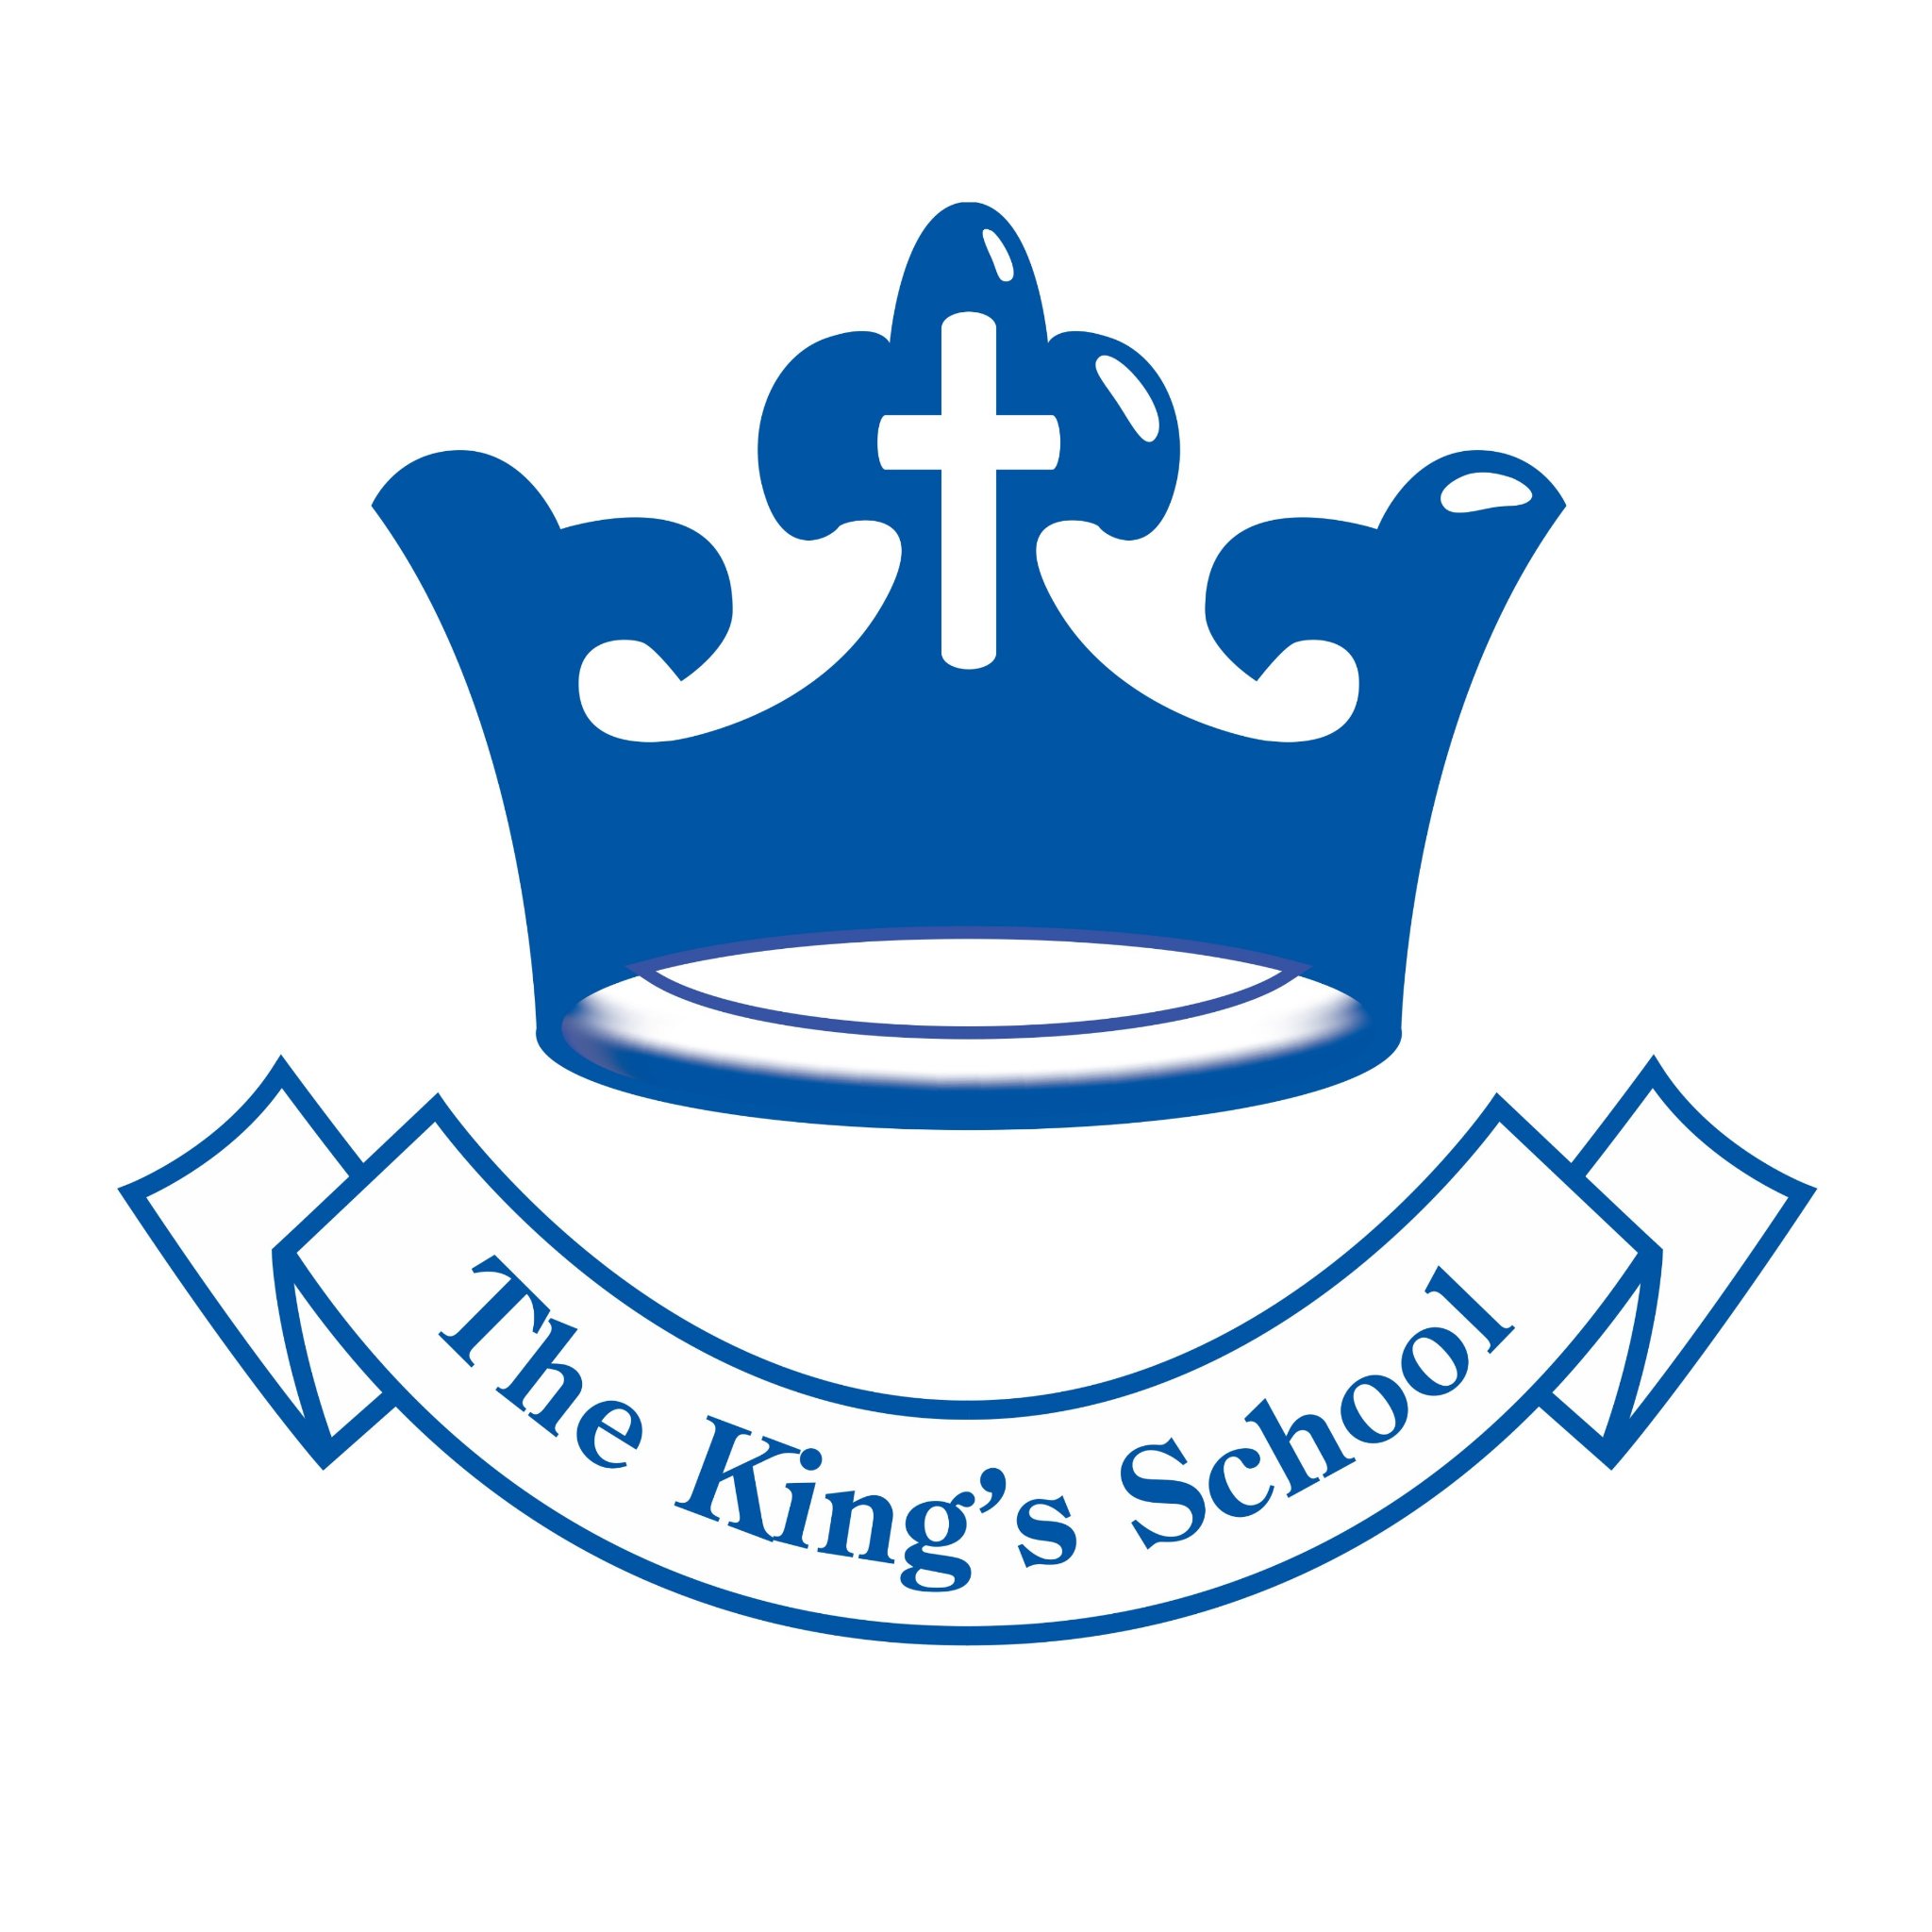 The Kings School, Harpenden校徽